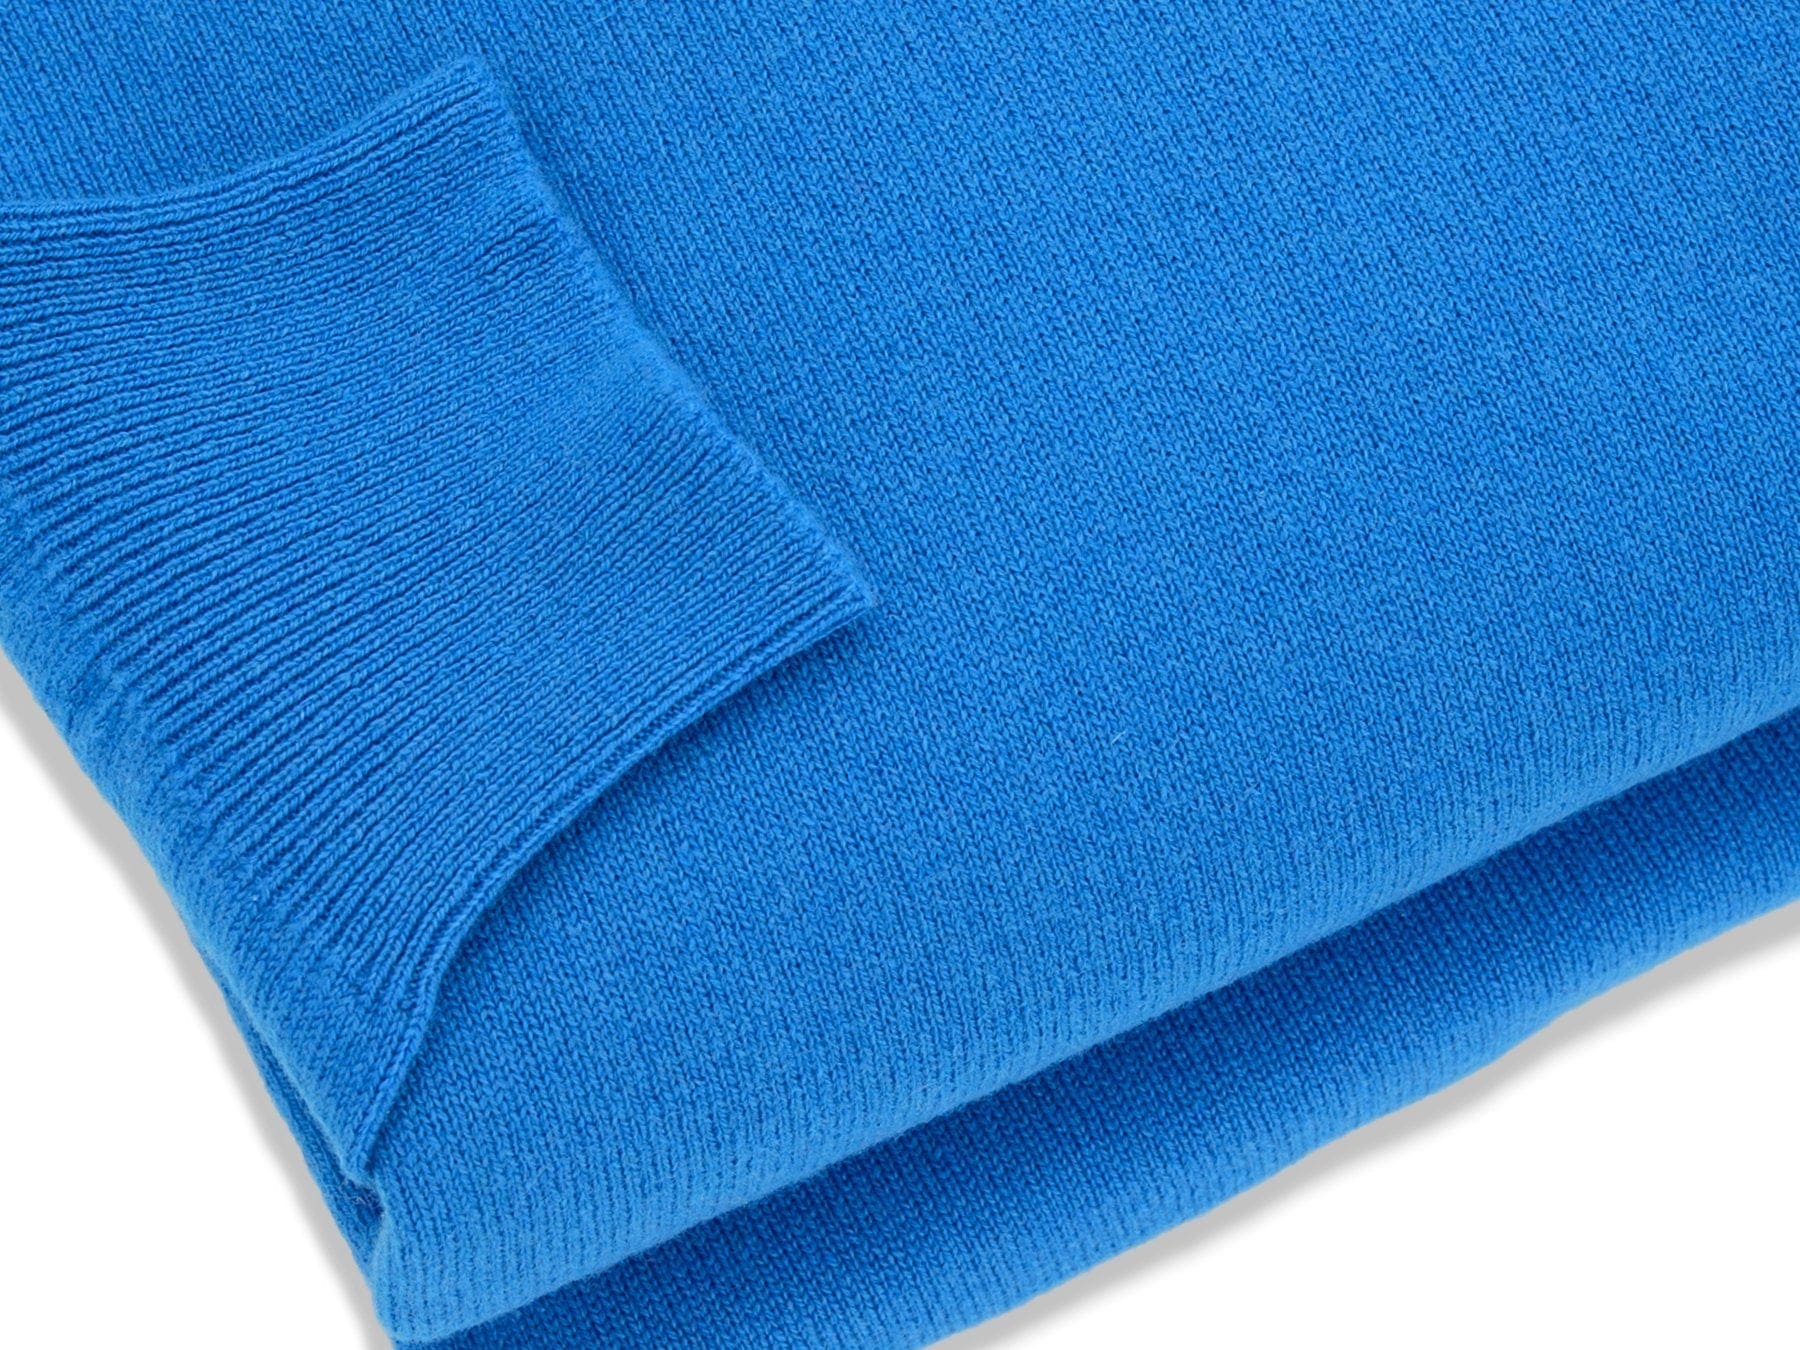 Plain Blue 2-Ply Cashmere V-Neck Sweater